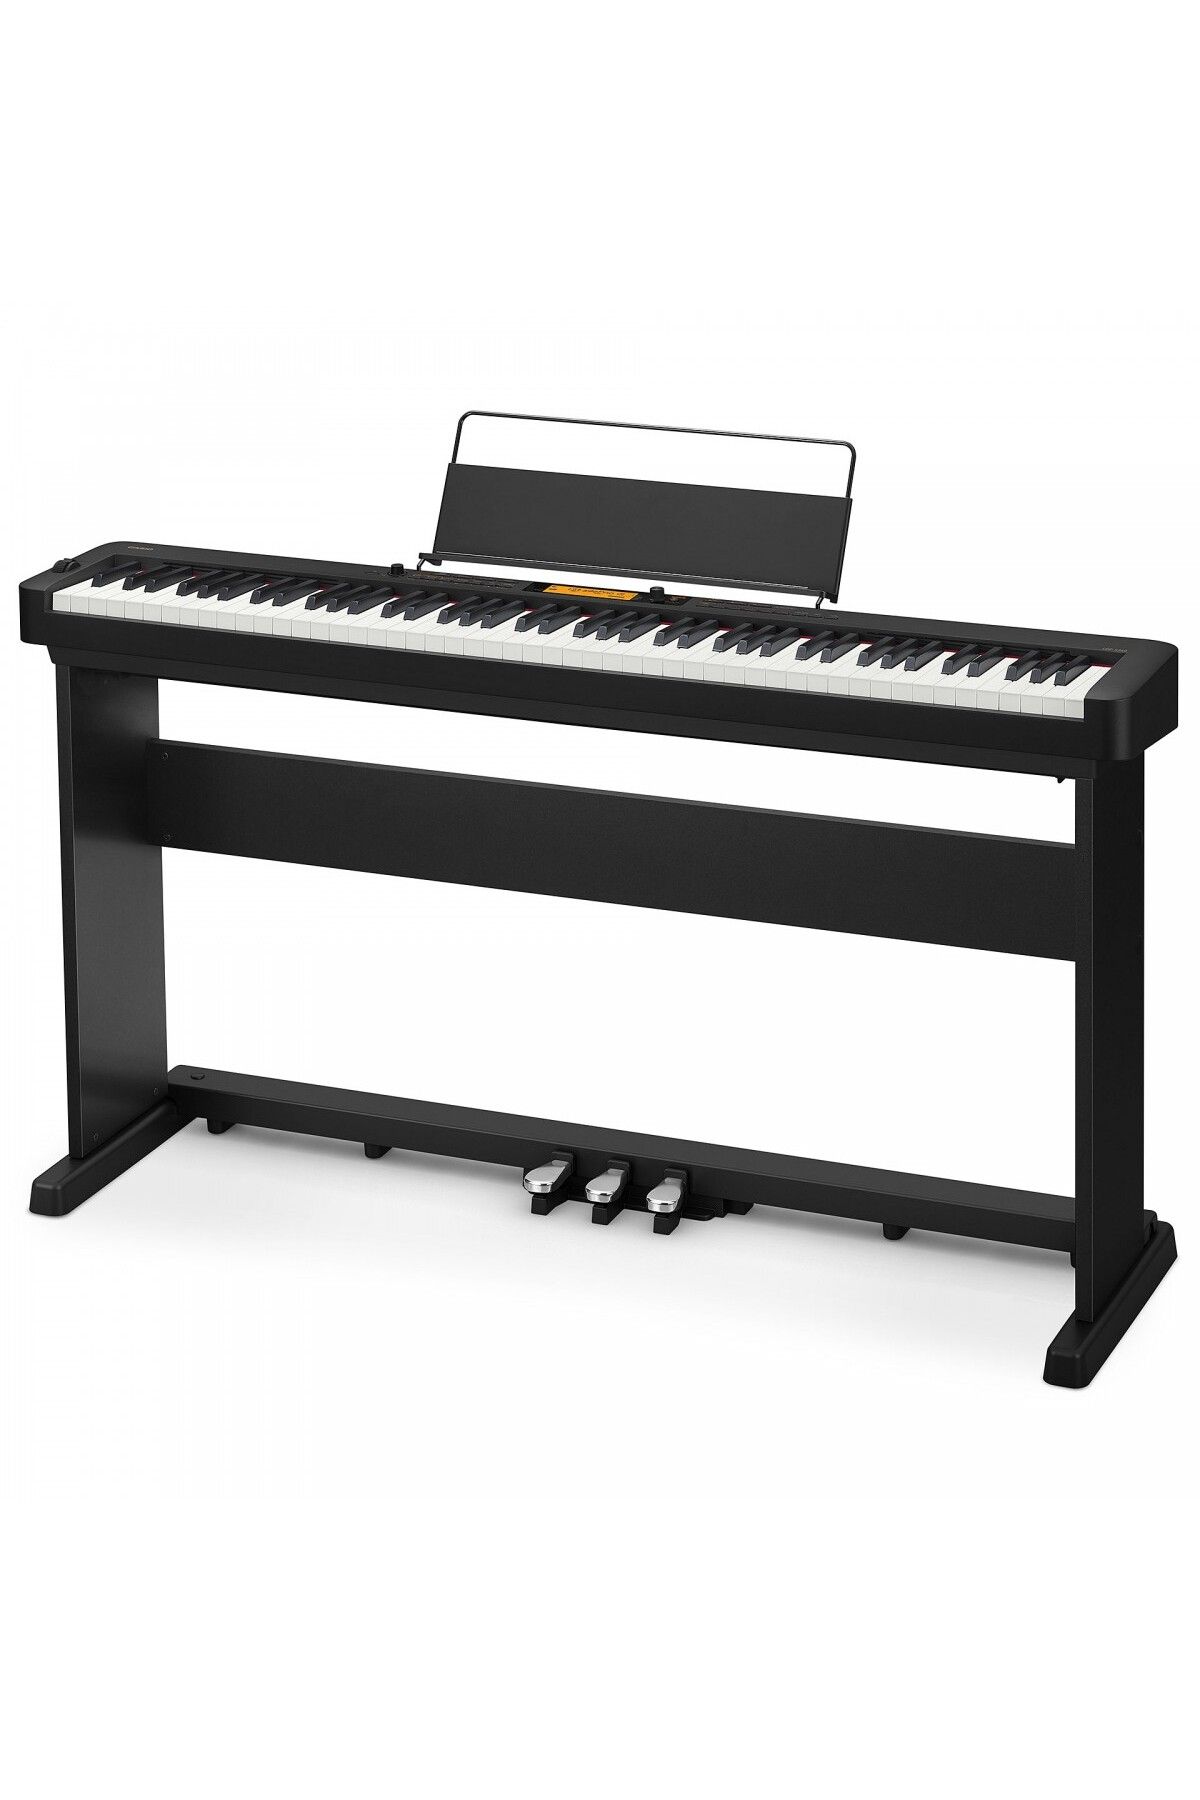 Casio Cdp-s360bkc2 Siyah Taşinabilir Dijital Piyano Seti